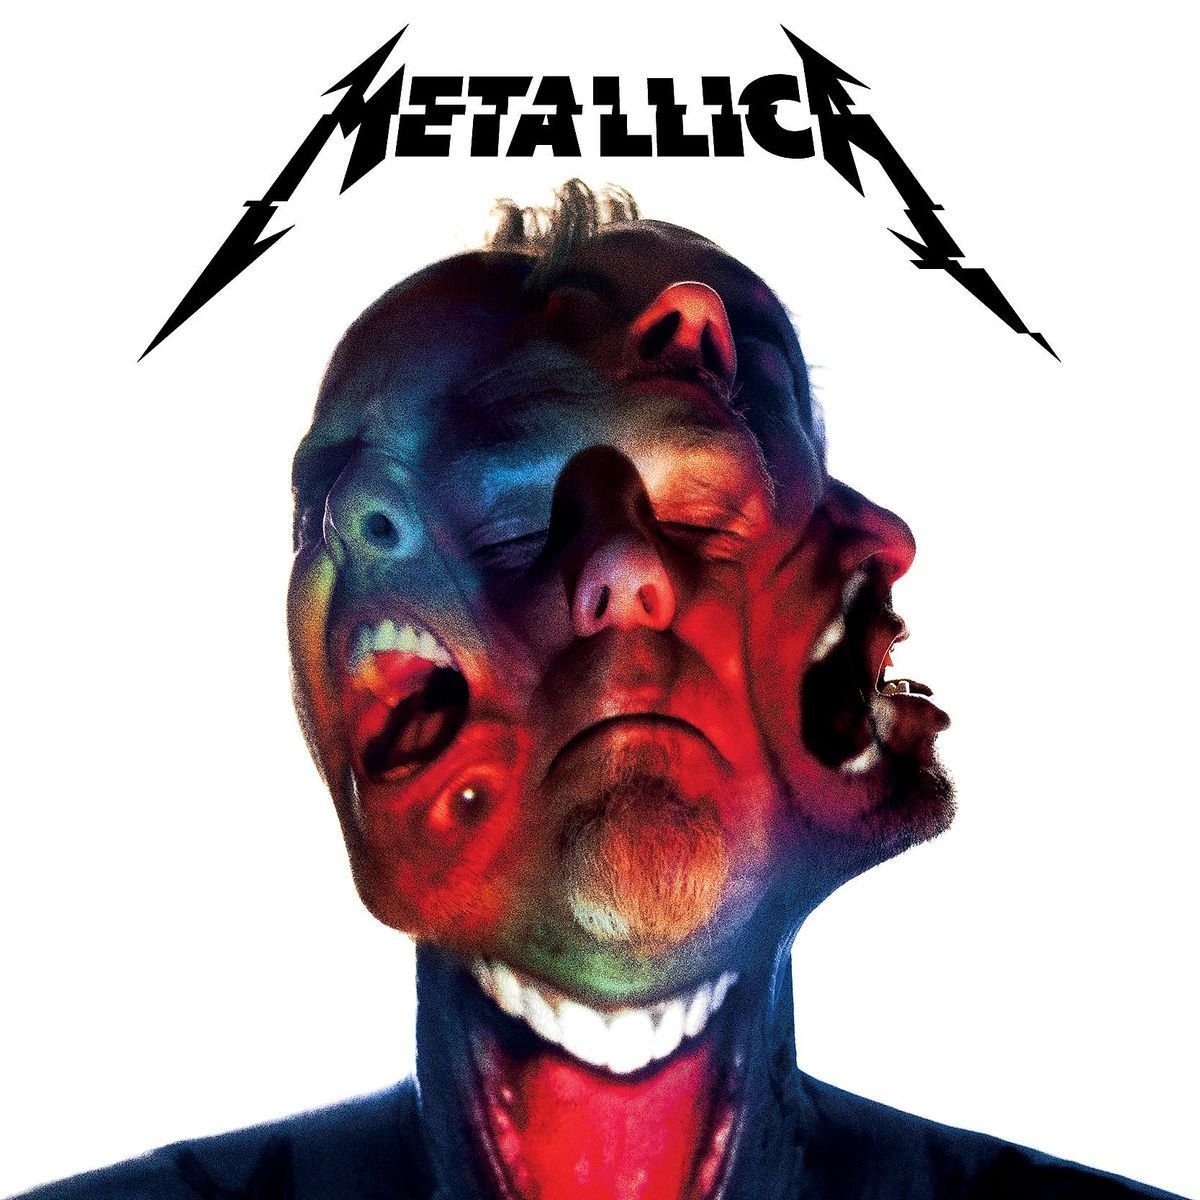 Metallica : Hardwired... To Self-Destruct